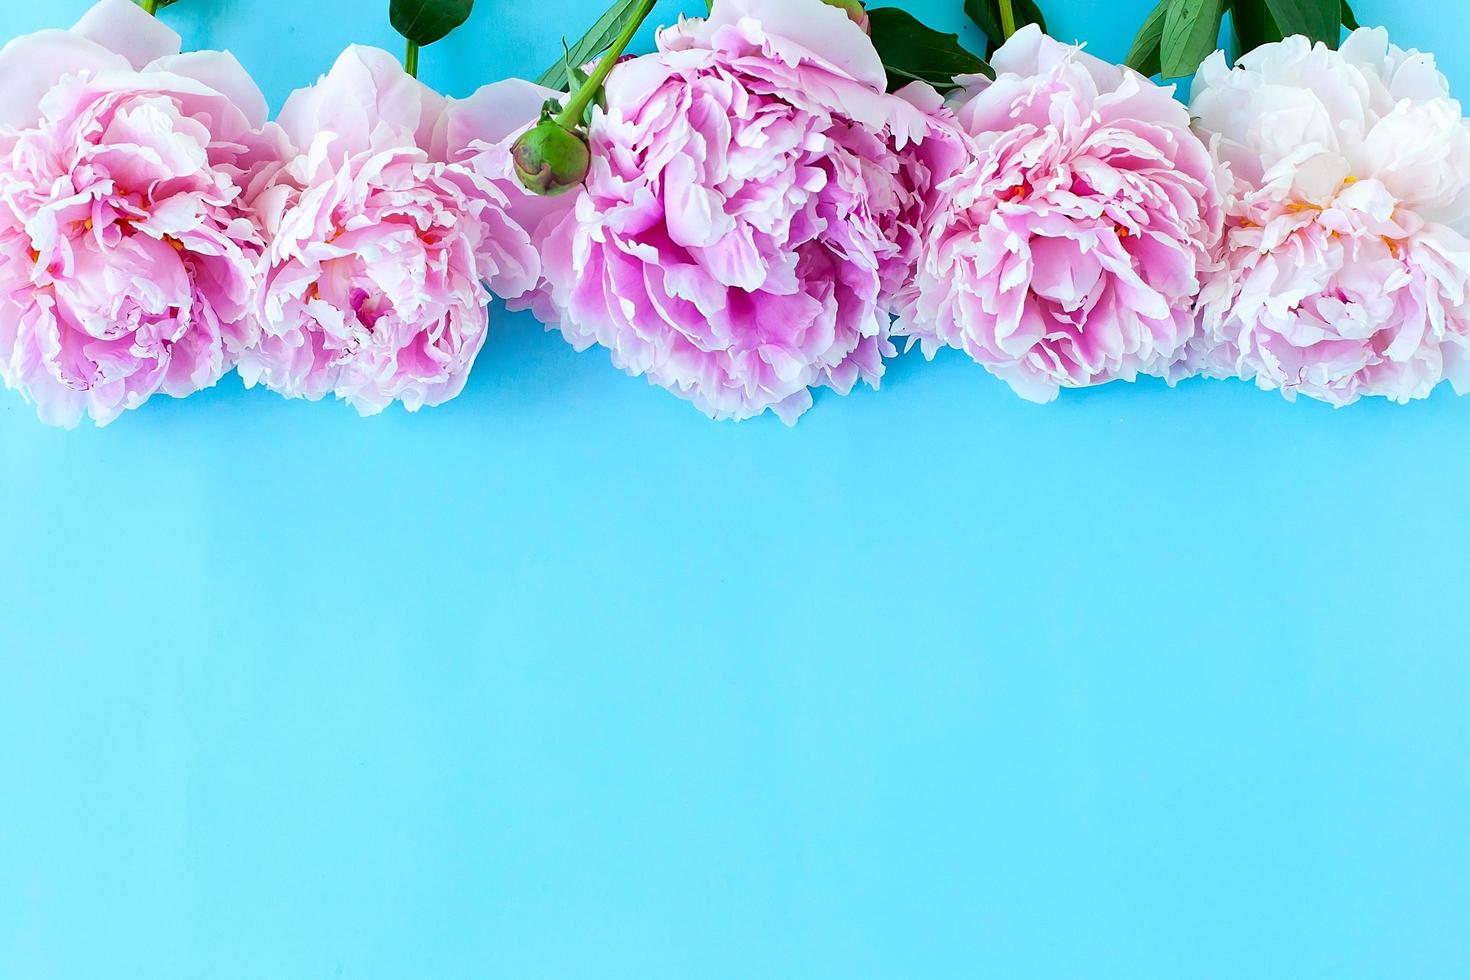 ramo de rosas arbustivas sobre un fondo azul. espacio para copiar. espacio  para texto. 3736839 Foto de stock en Vecteezy